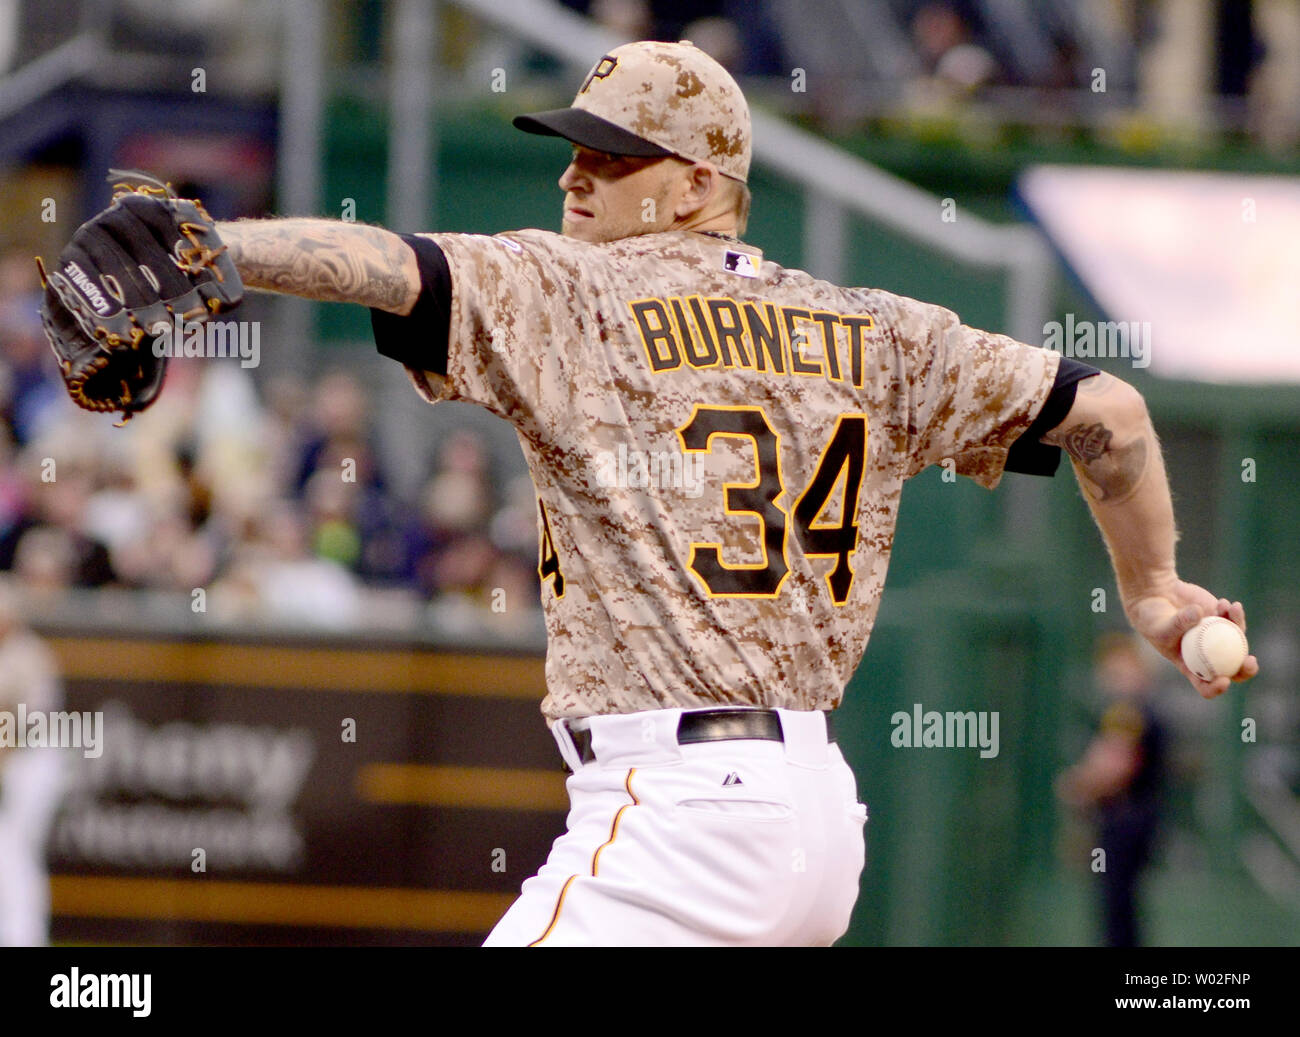 Pittsburgh Pirates To Wear Camouflage Alternate Jerseys?